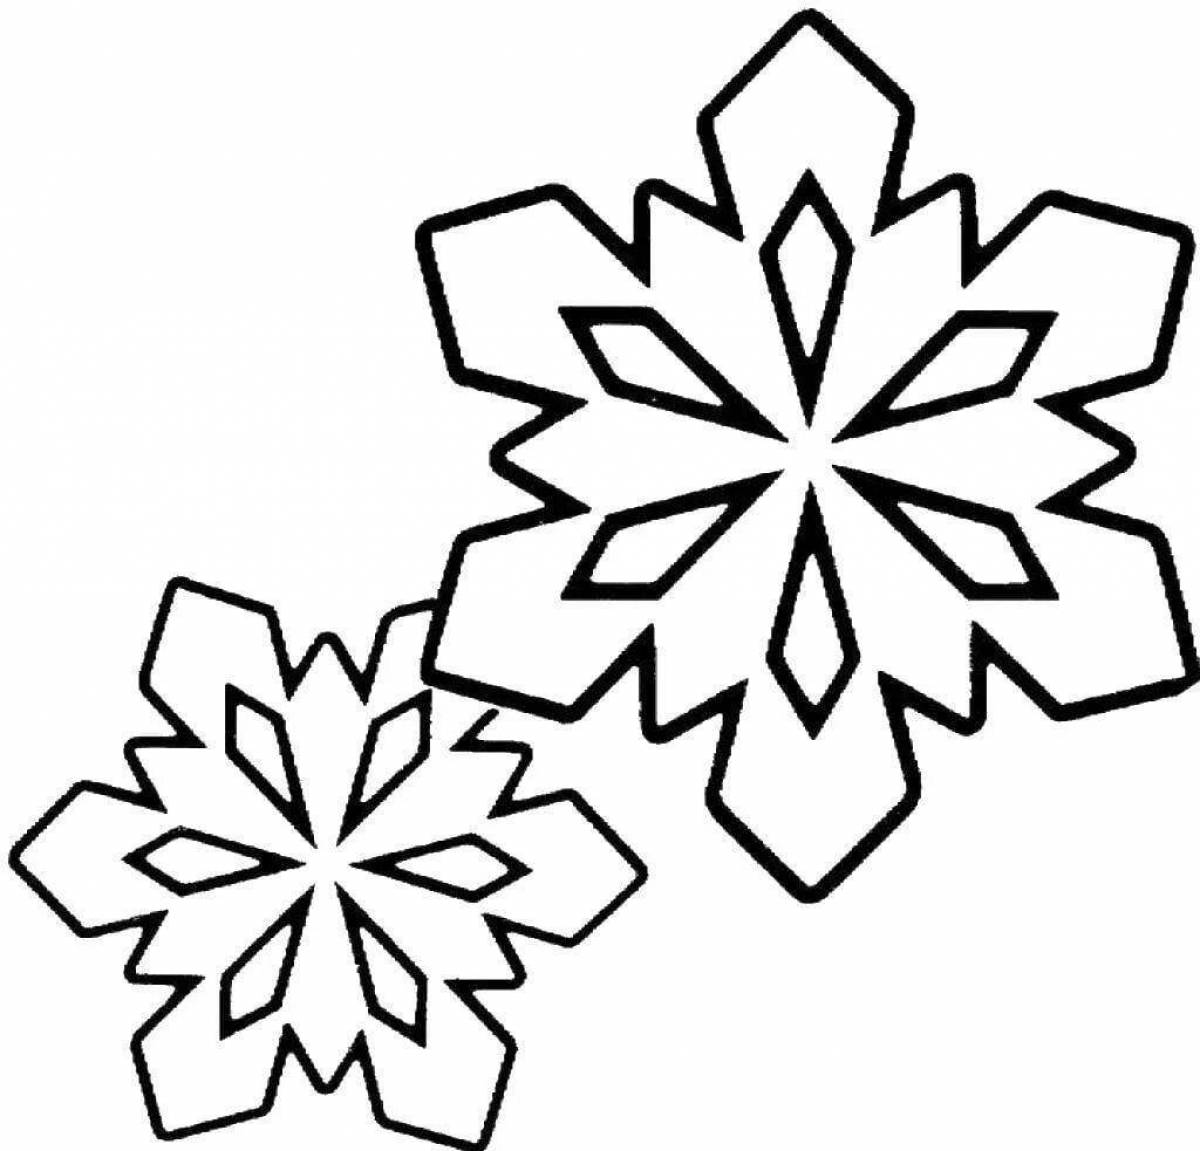 Beautiful Christmas snowflake coloring book